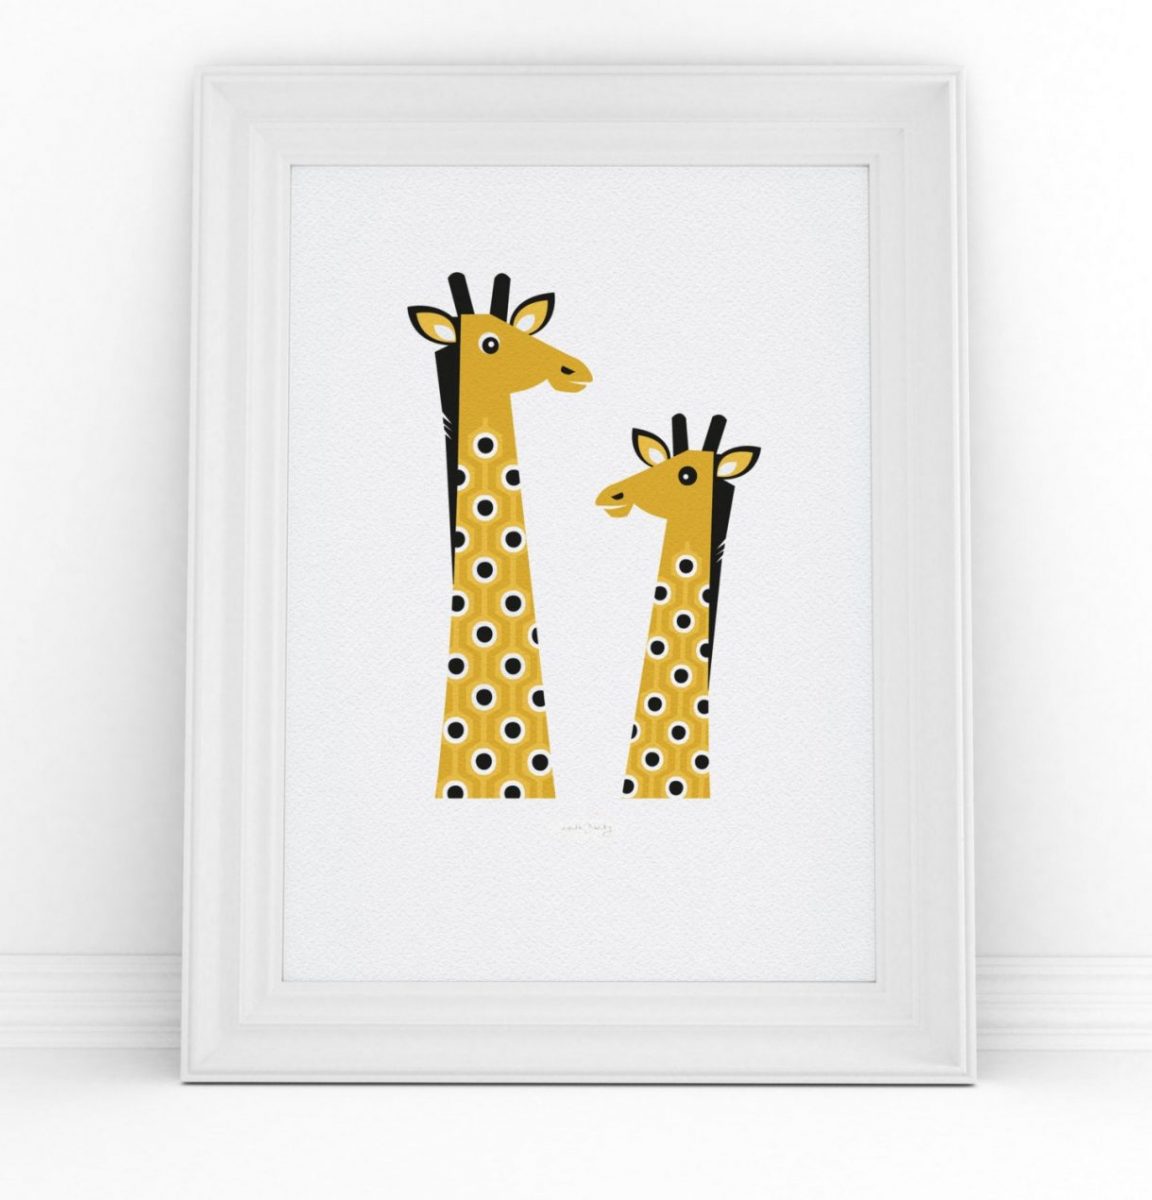 Giraffe Print, Giraffe Animal Poster, Geometric Jungle Art, Scandinavian Design, A4 Retro Nursery Wall Art, Giraffe Print Gift, Kids Print